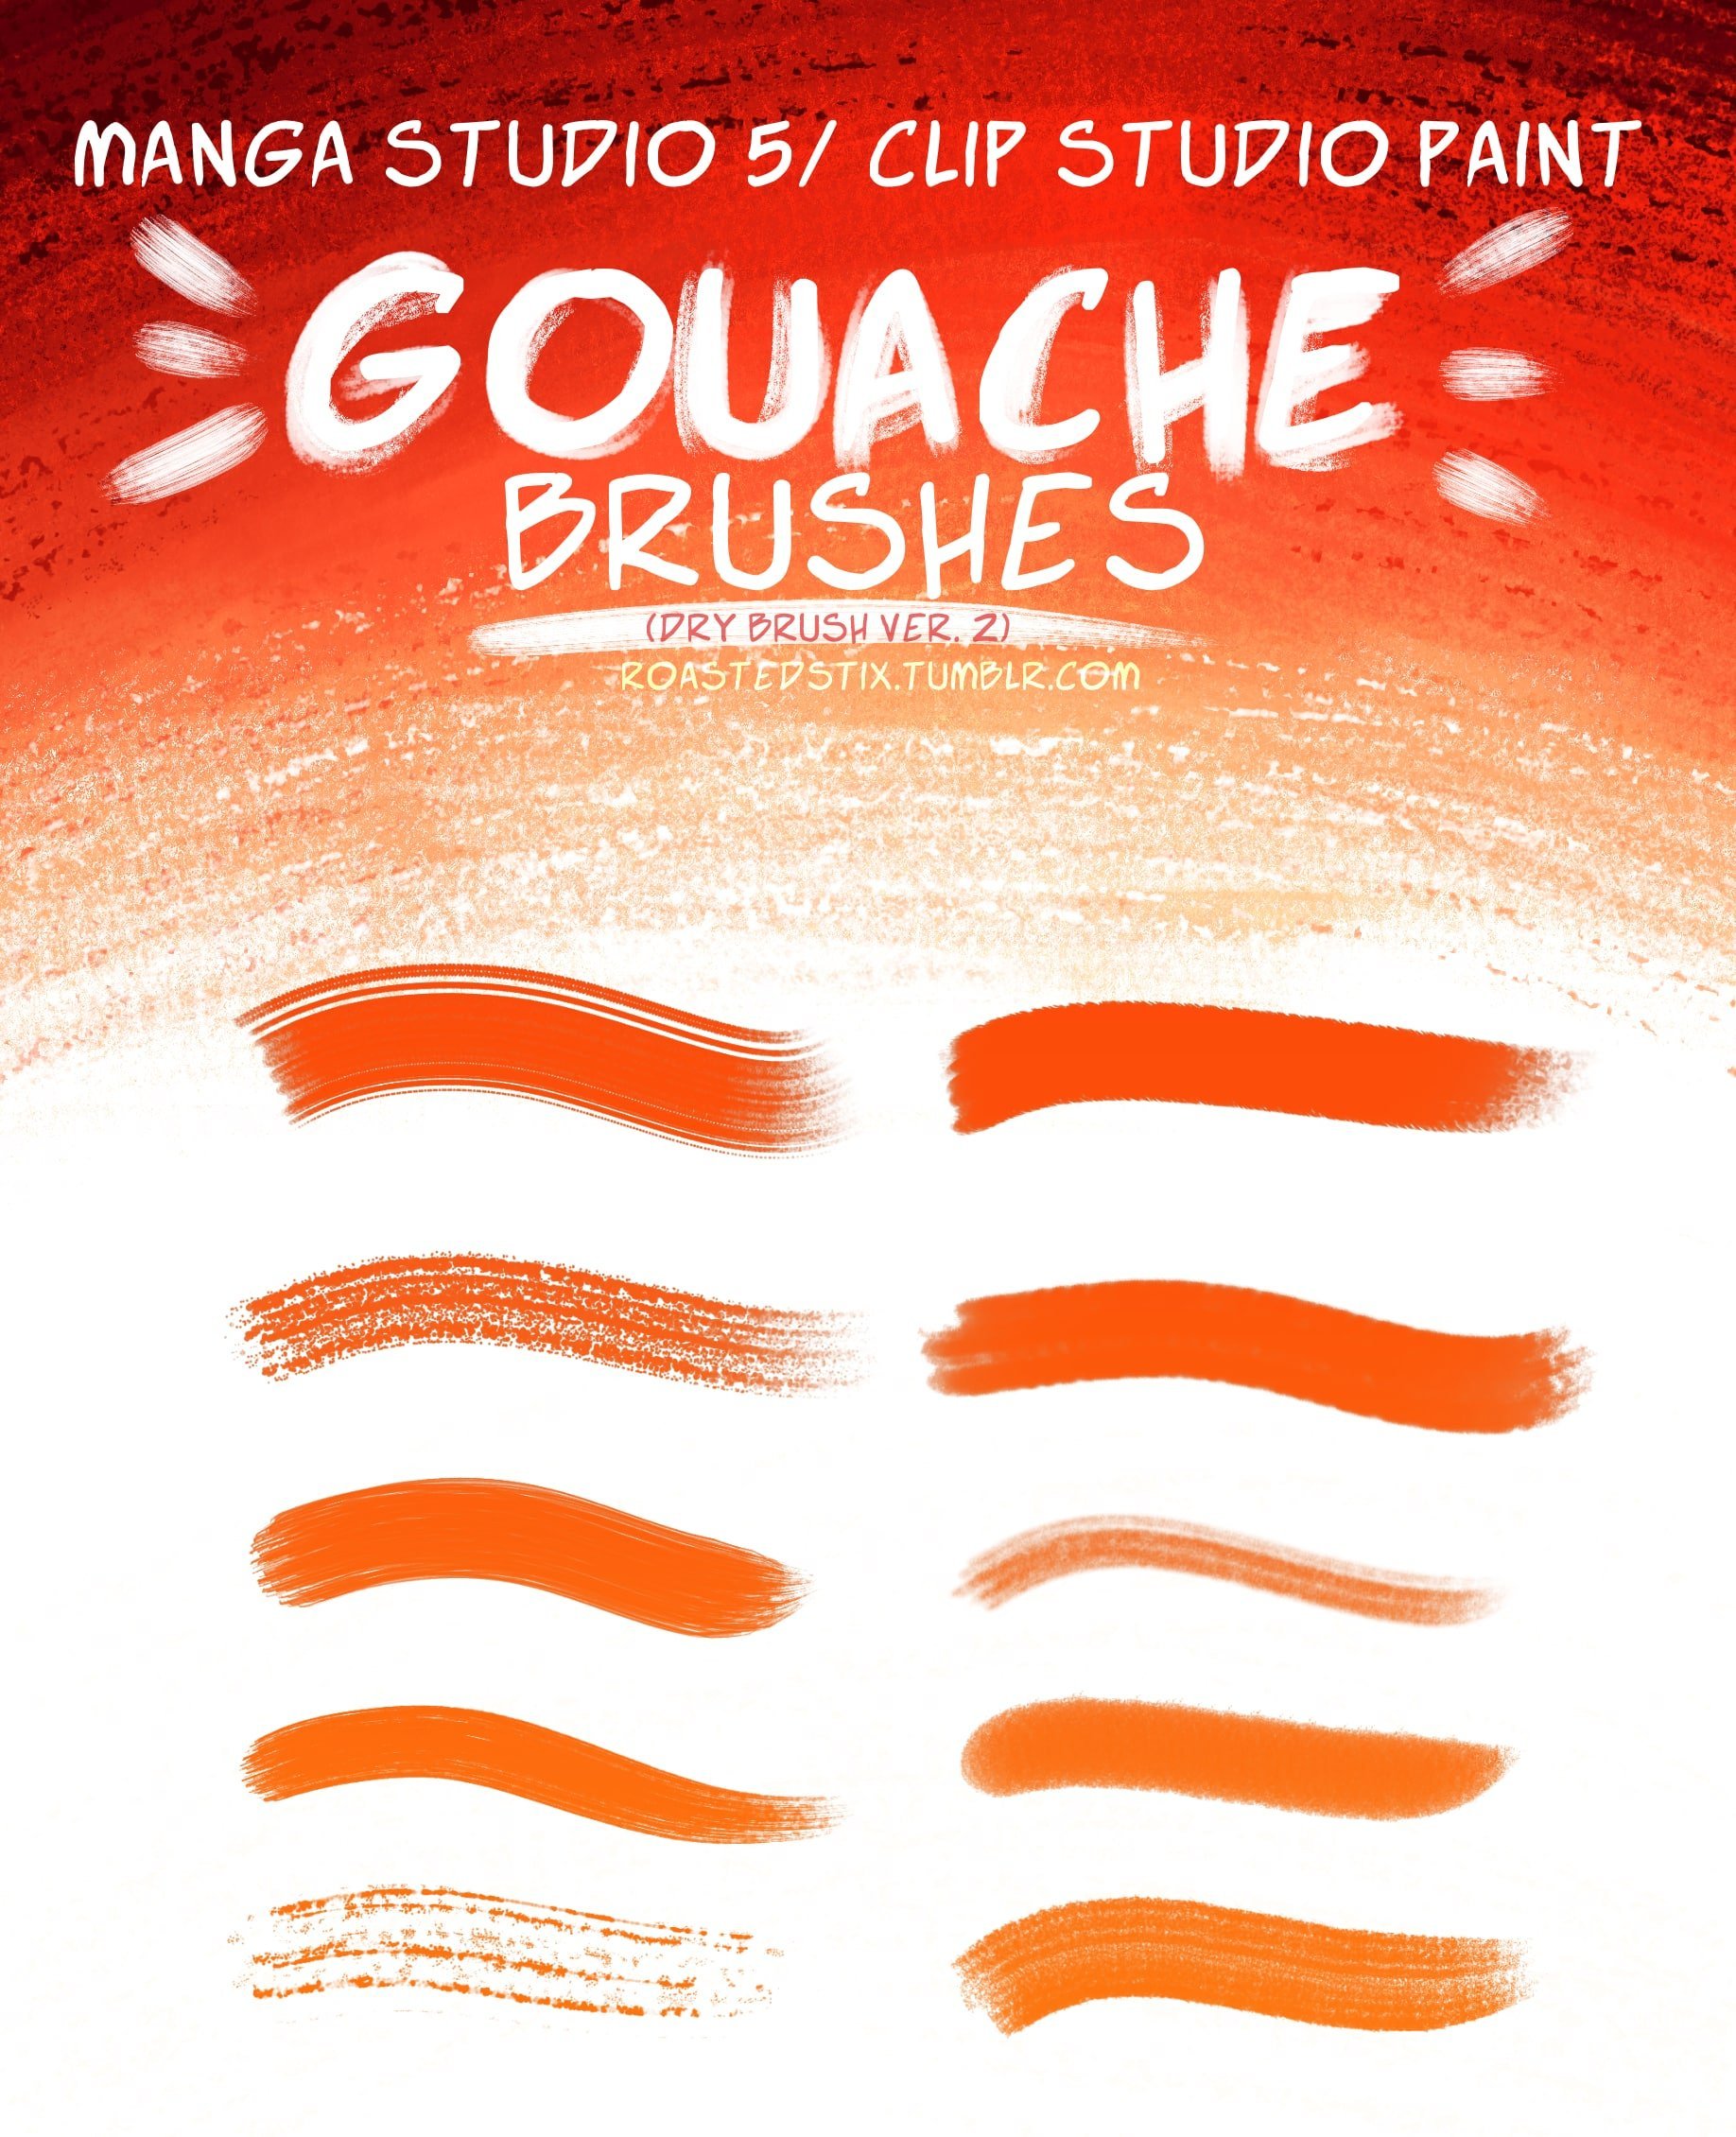 4. Gouache Brushes